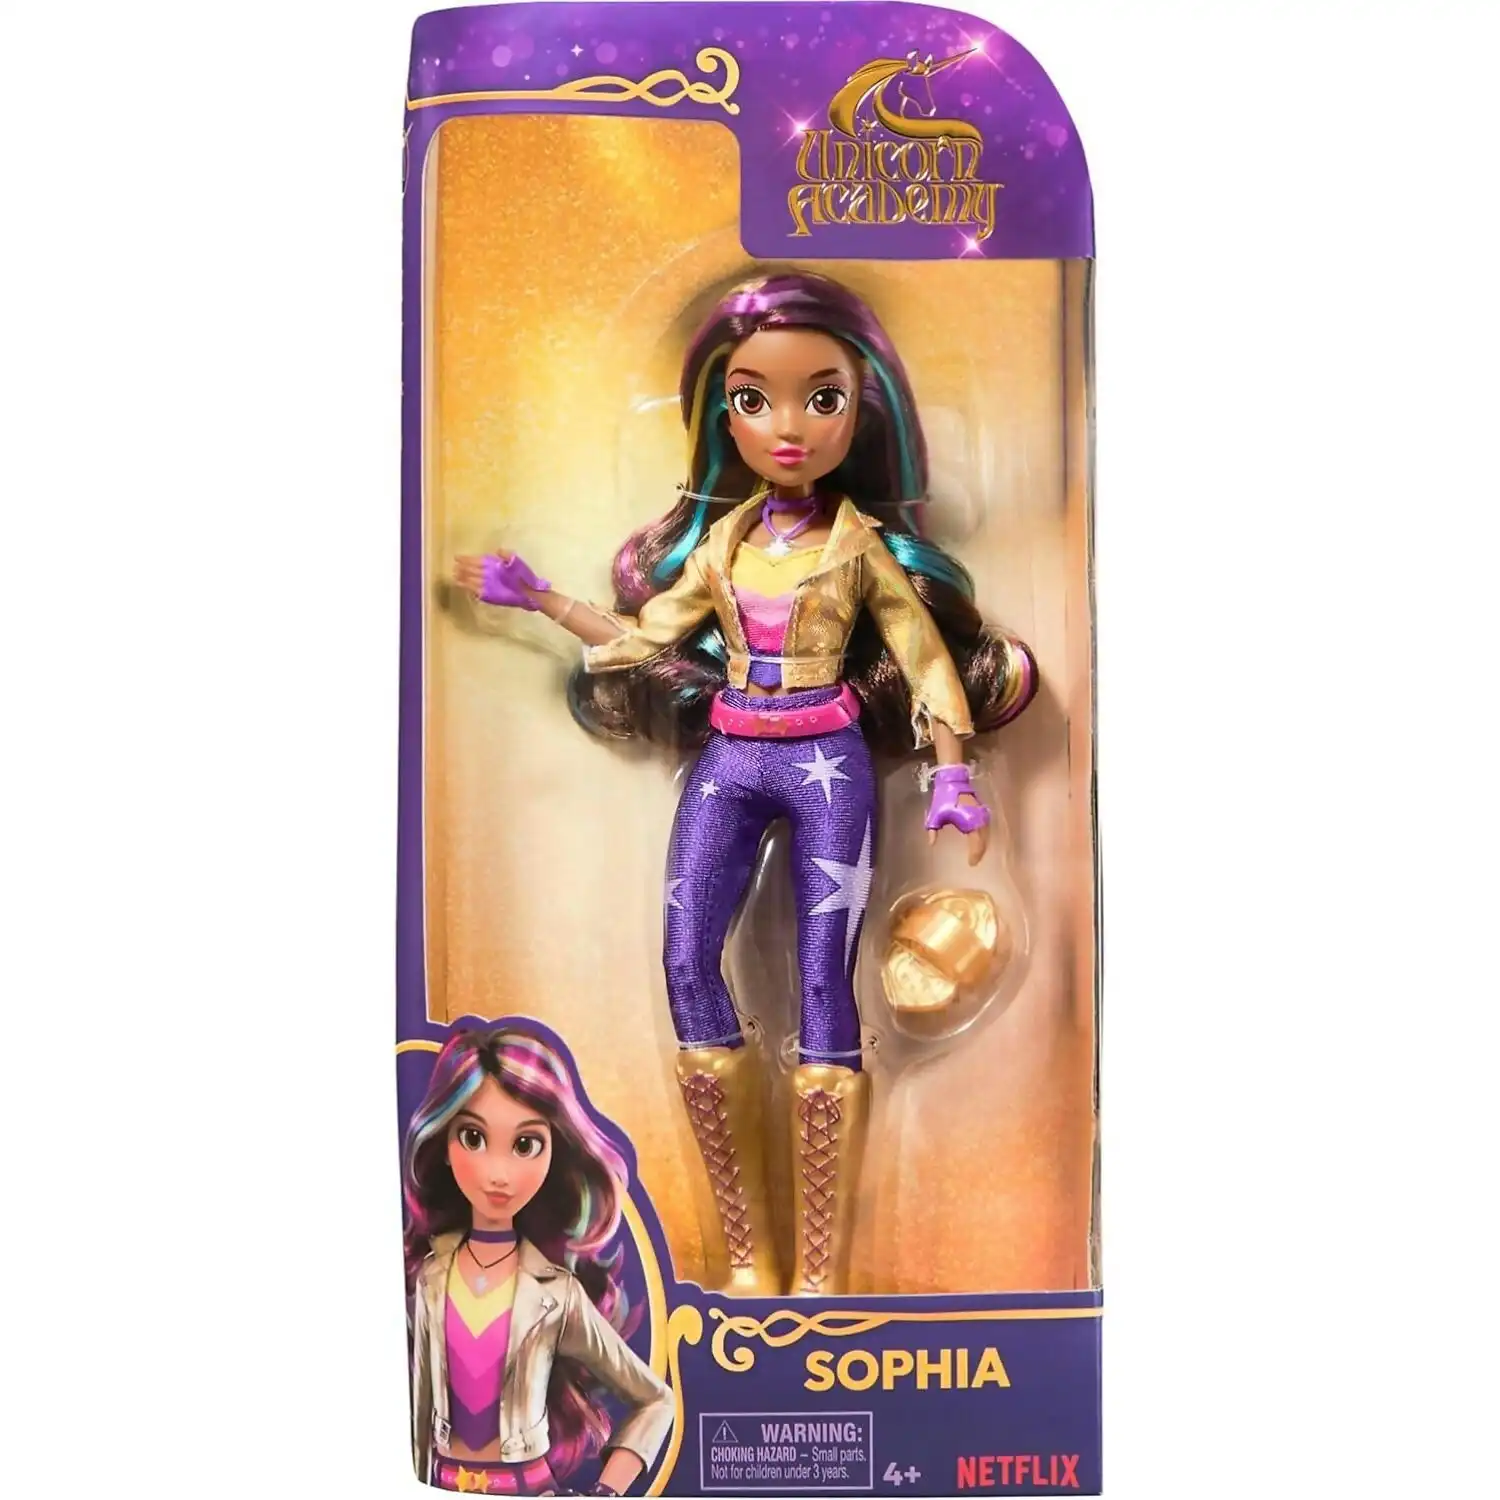 Unicorn Academy - Sophia Fashion Doll Netflix